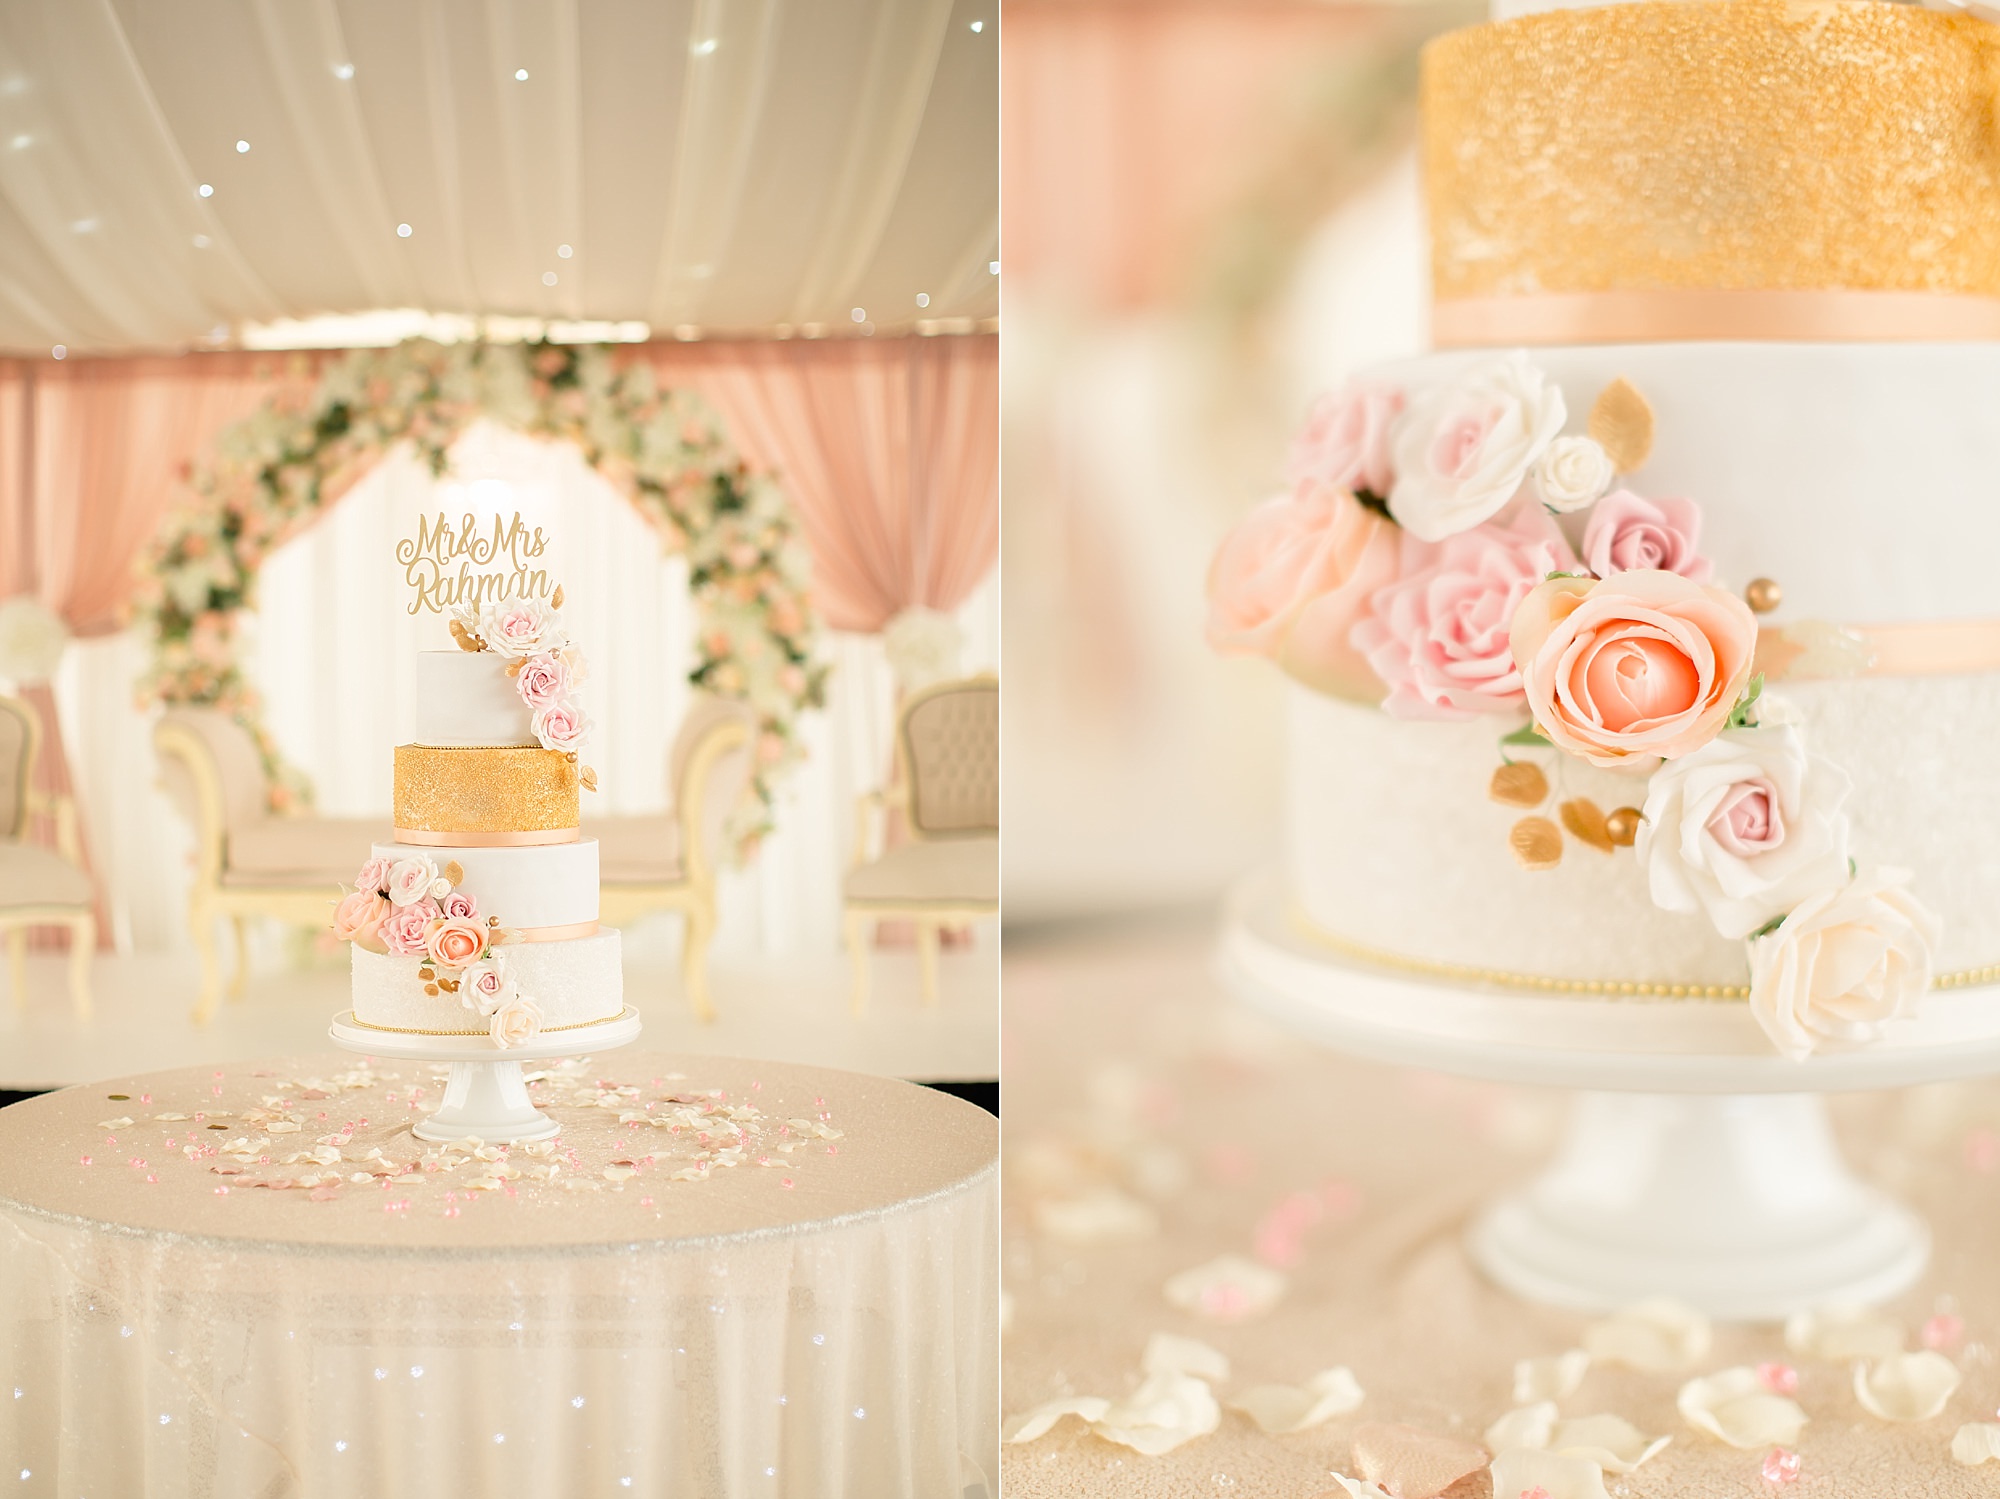 Wedding Cake Details at Hilton Hall, Wolverhampton